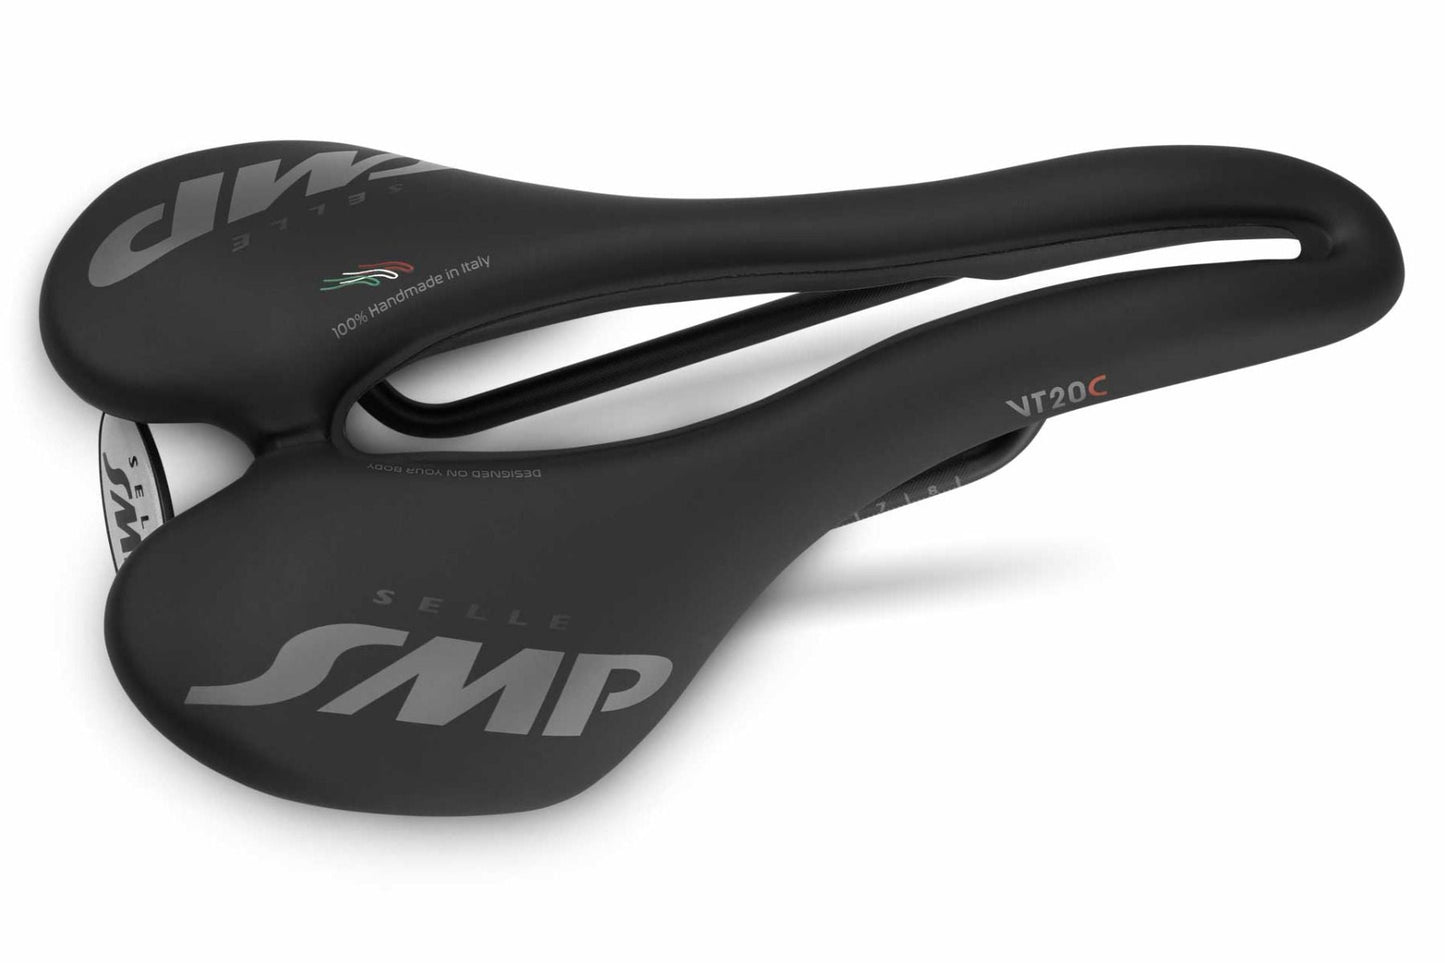 SMP VT20C saddle